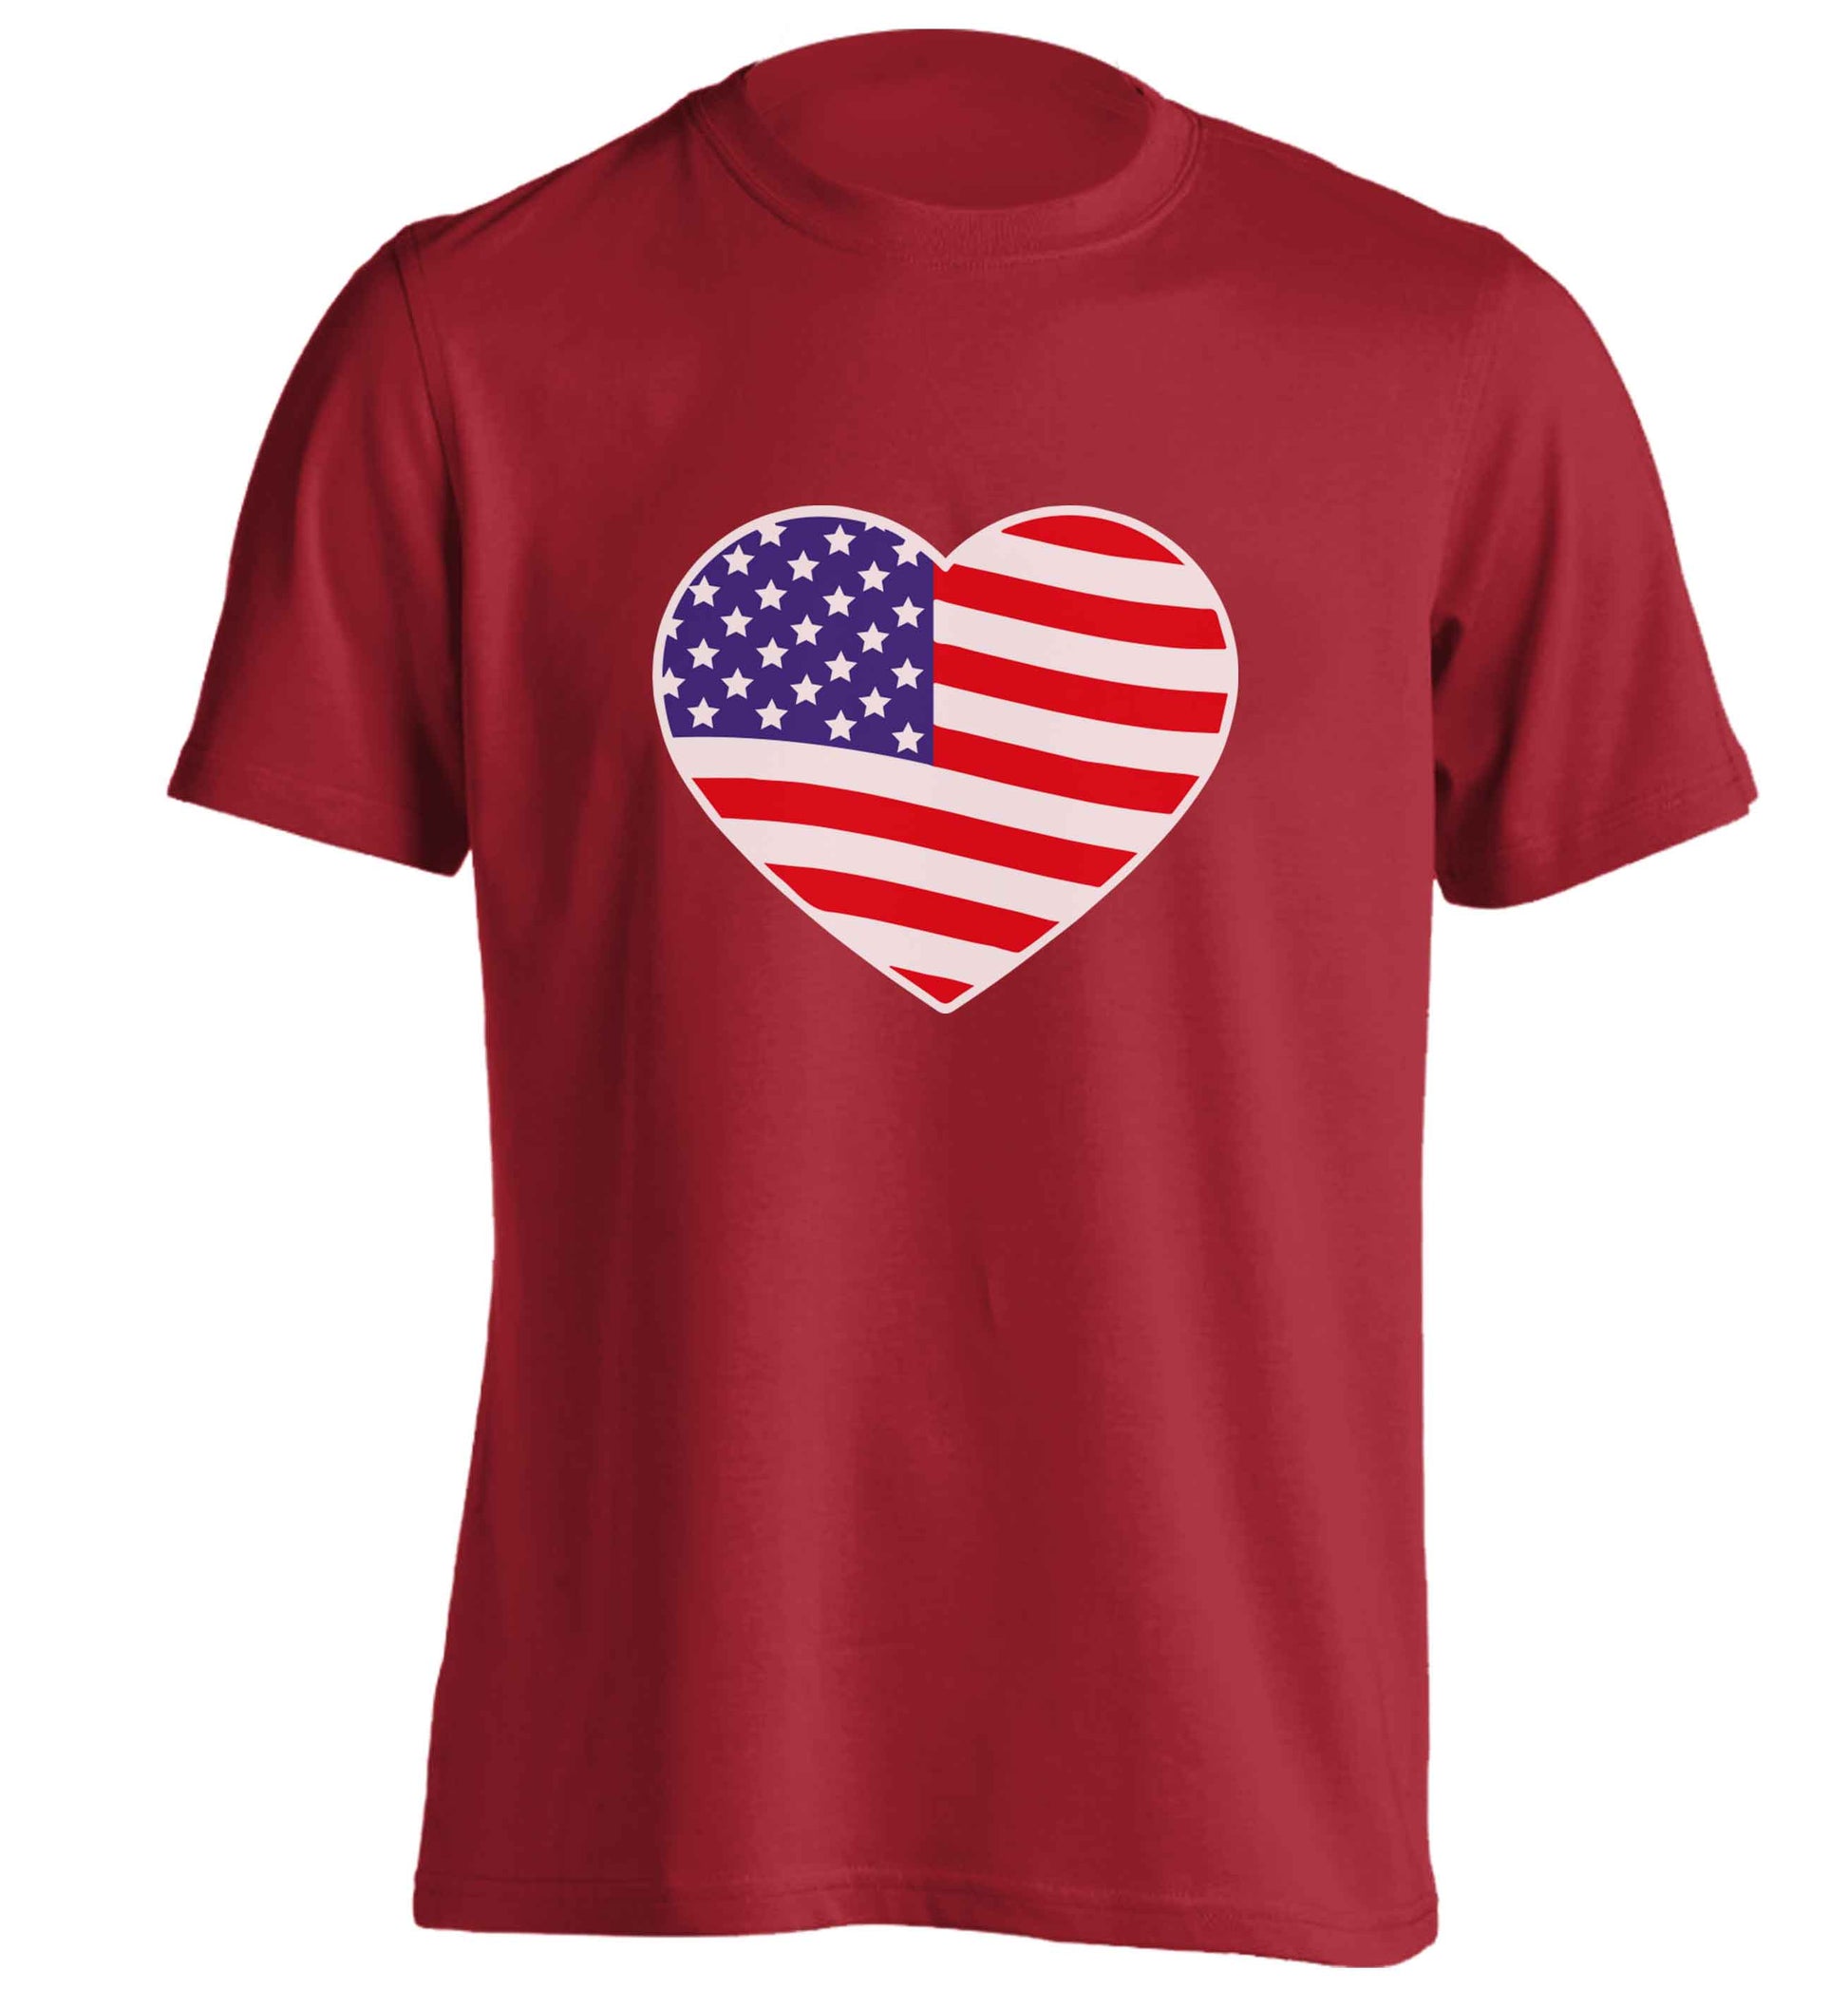 American USA Heart Flag adults unisex red Tshirt 2XL